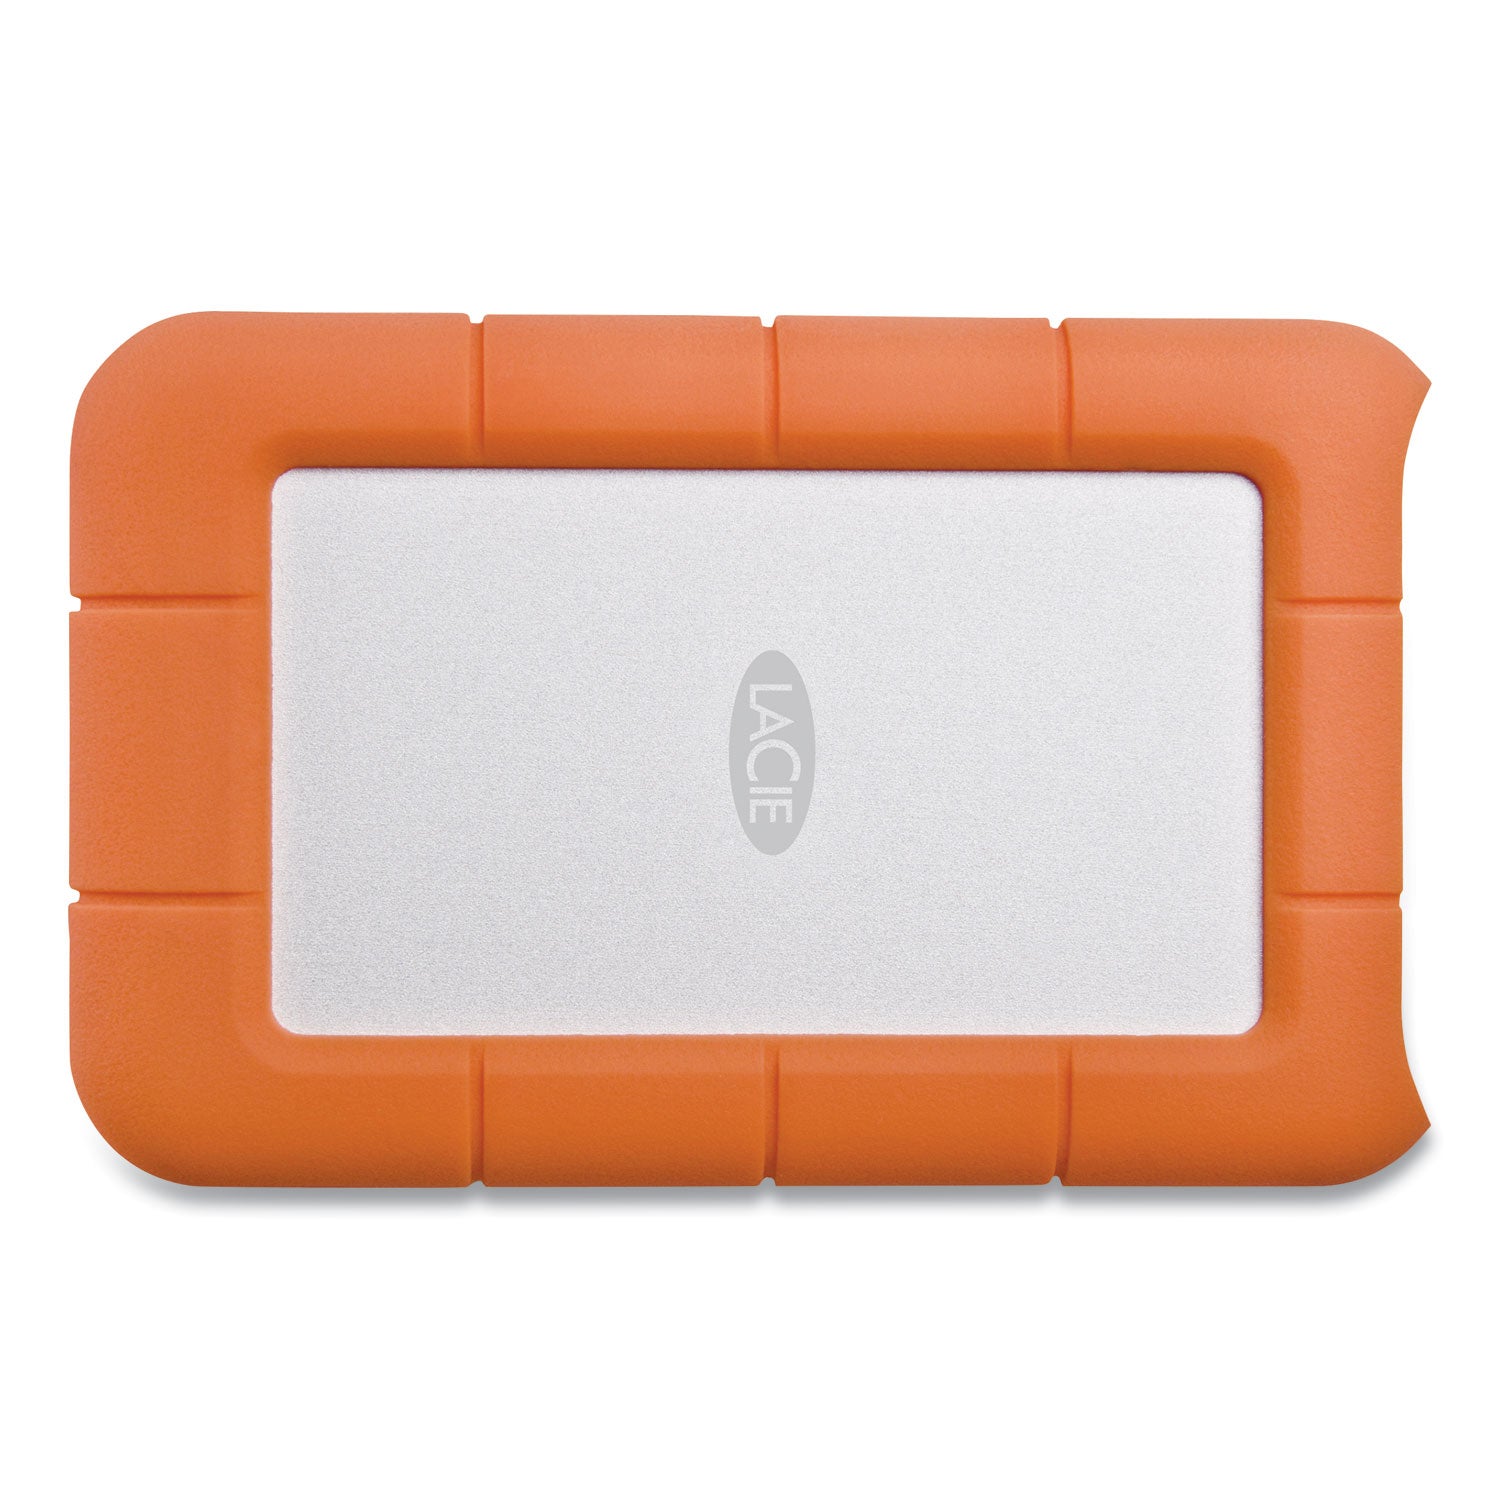 rugged-portable-external-hard-drive-2-tb-usb-c-orange-silver_ciestfr2000800 - 1